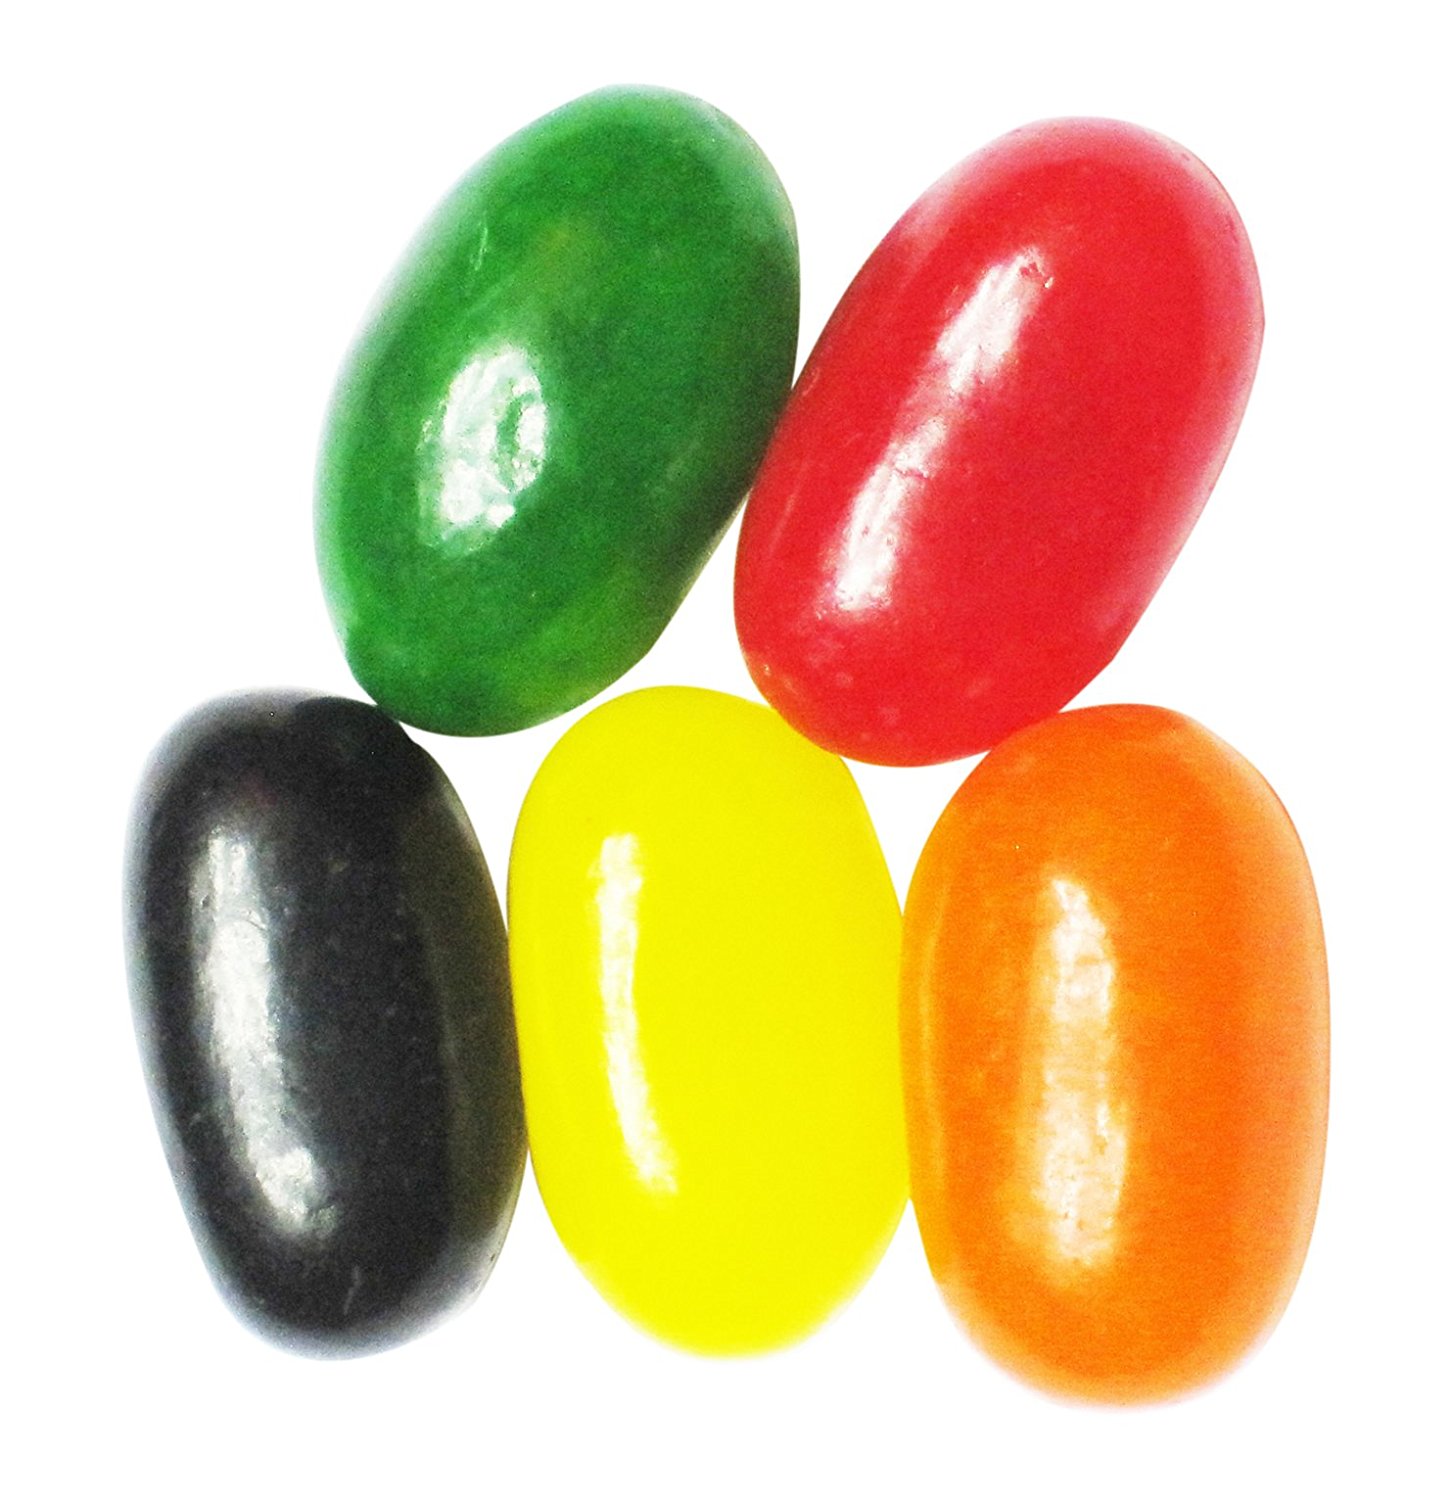 Jelly bean видео